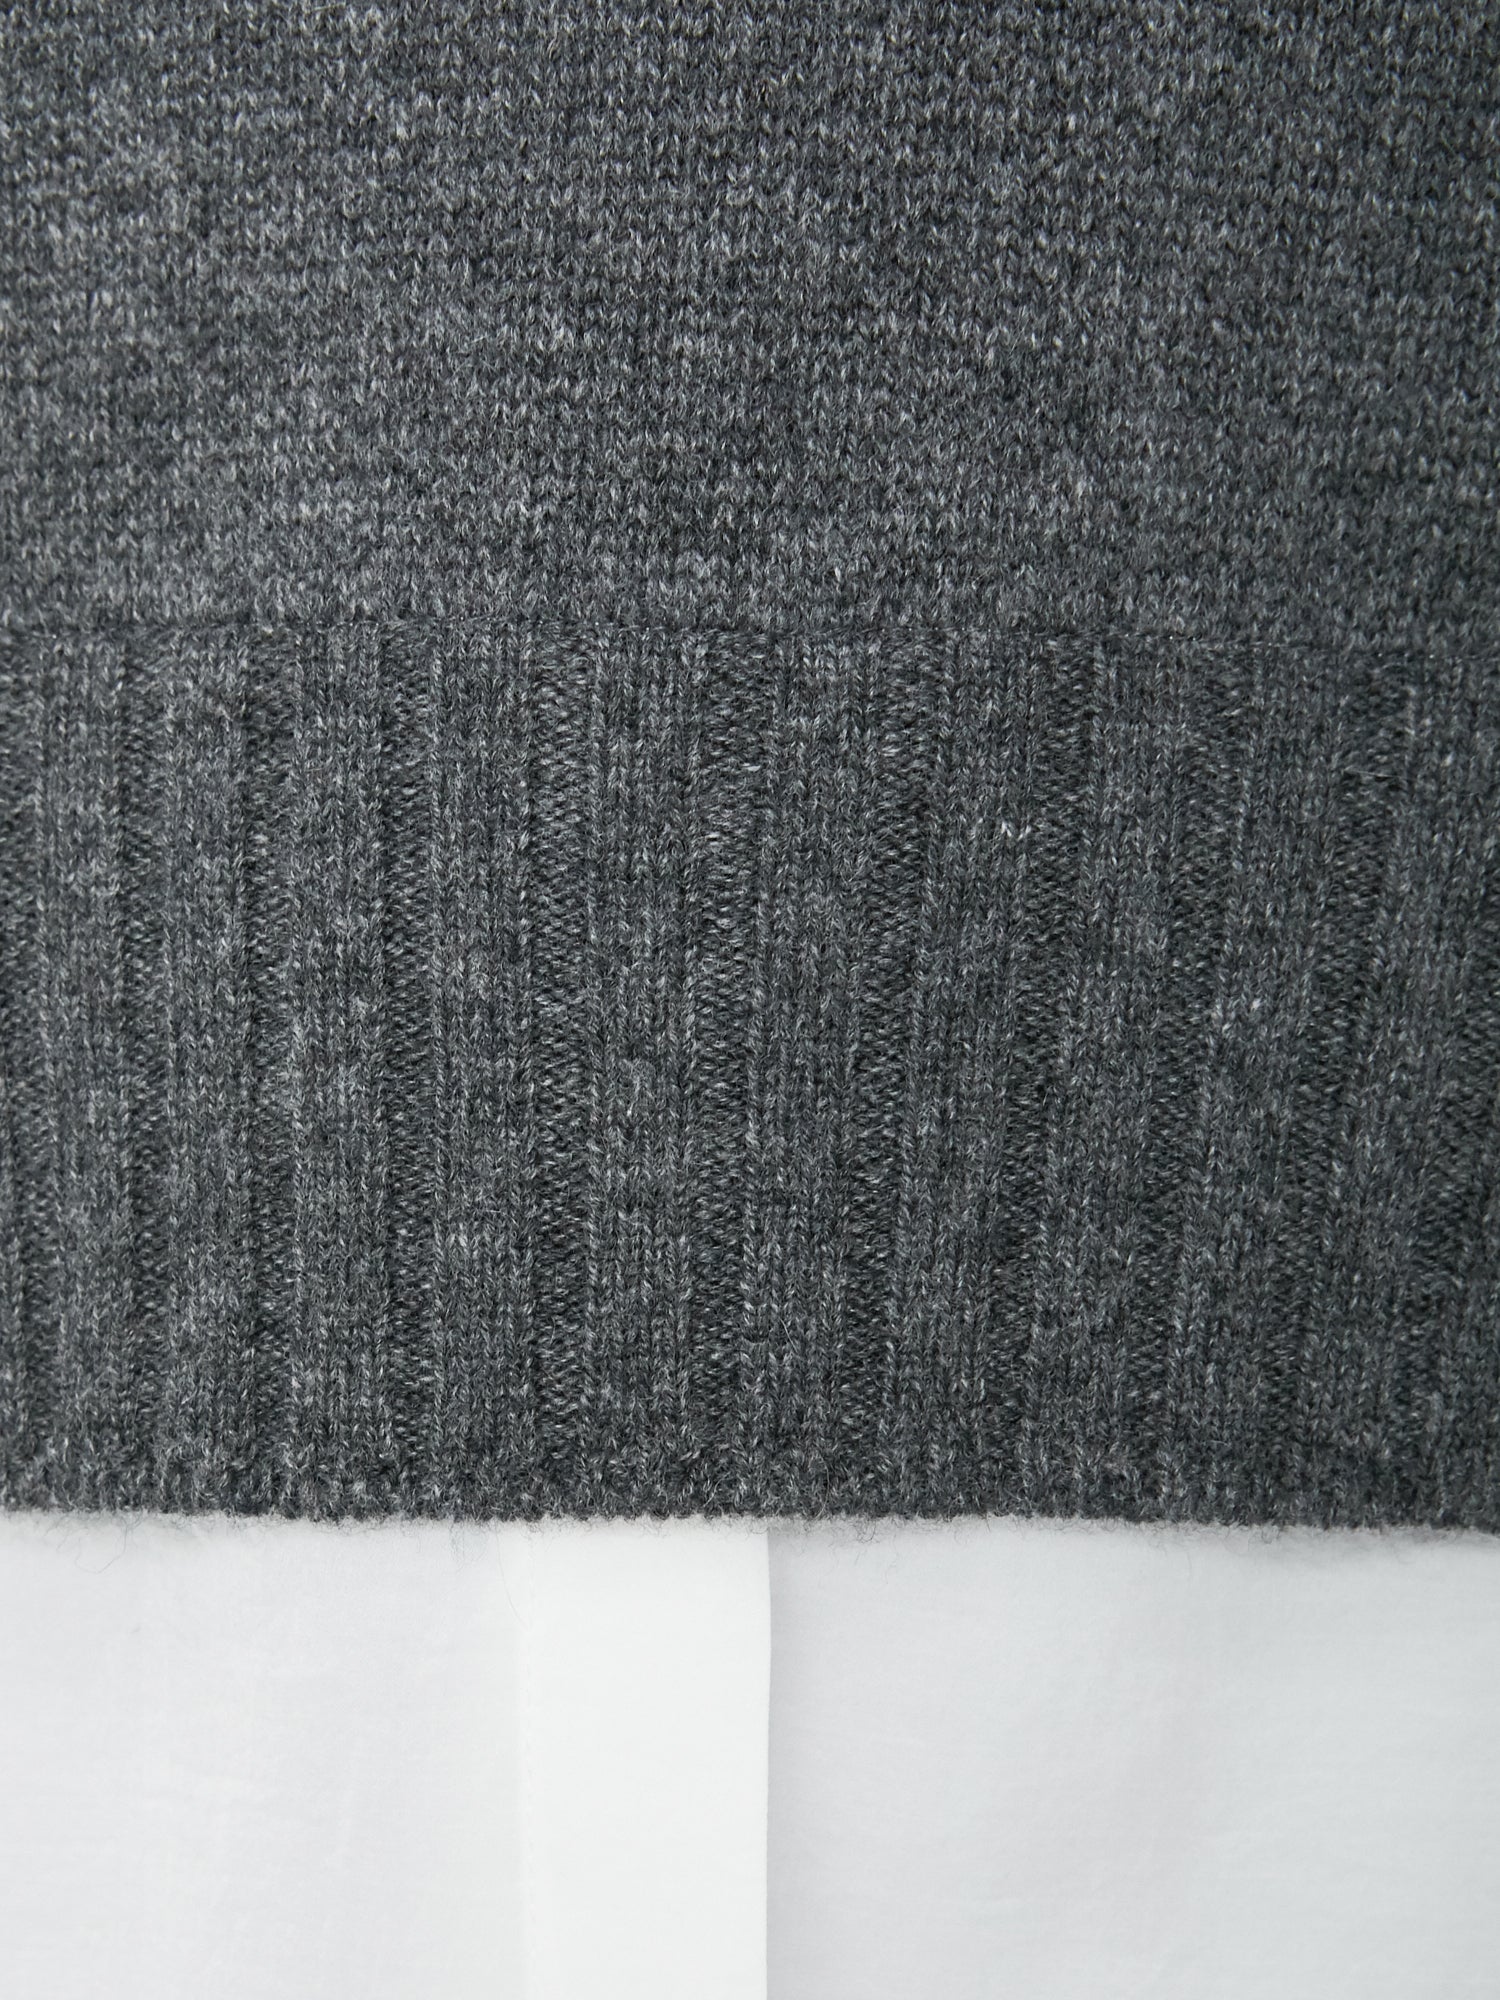 Jolie dark grey layered turtleneck sweater close up